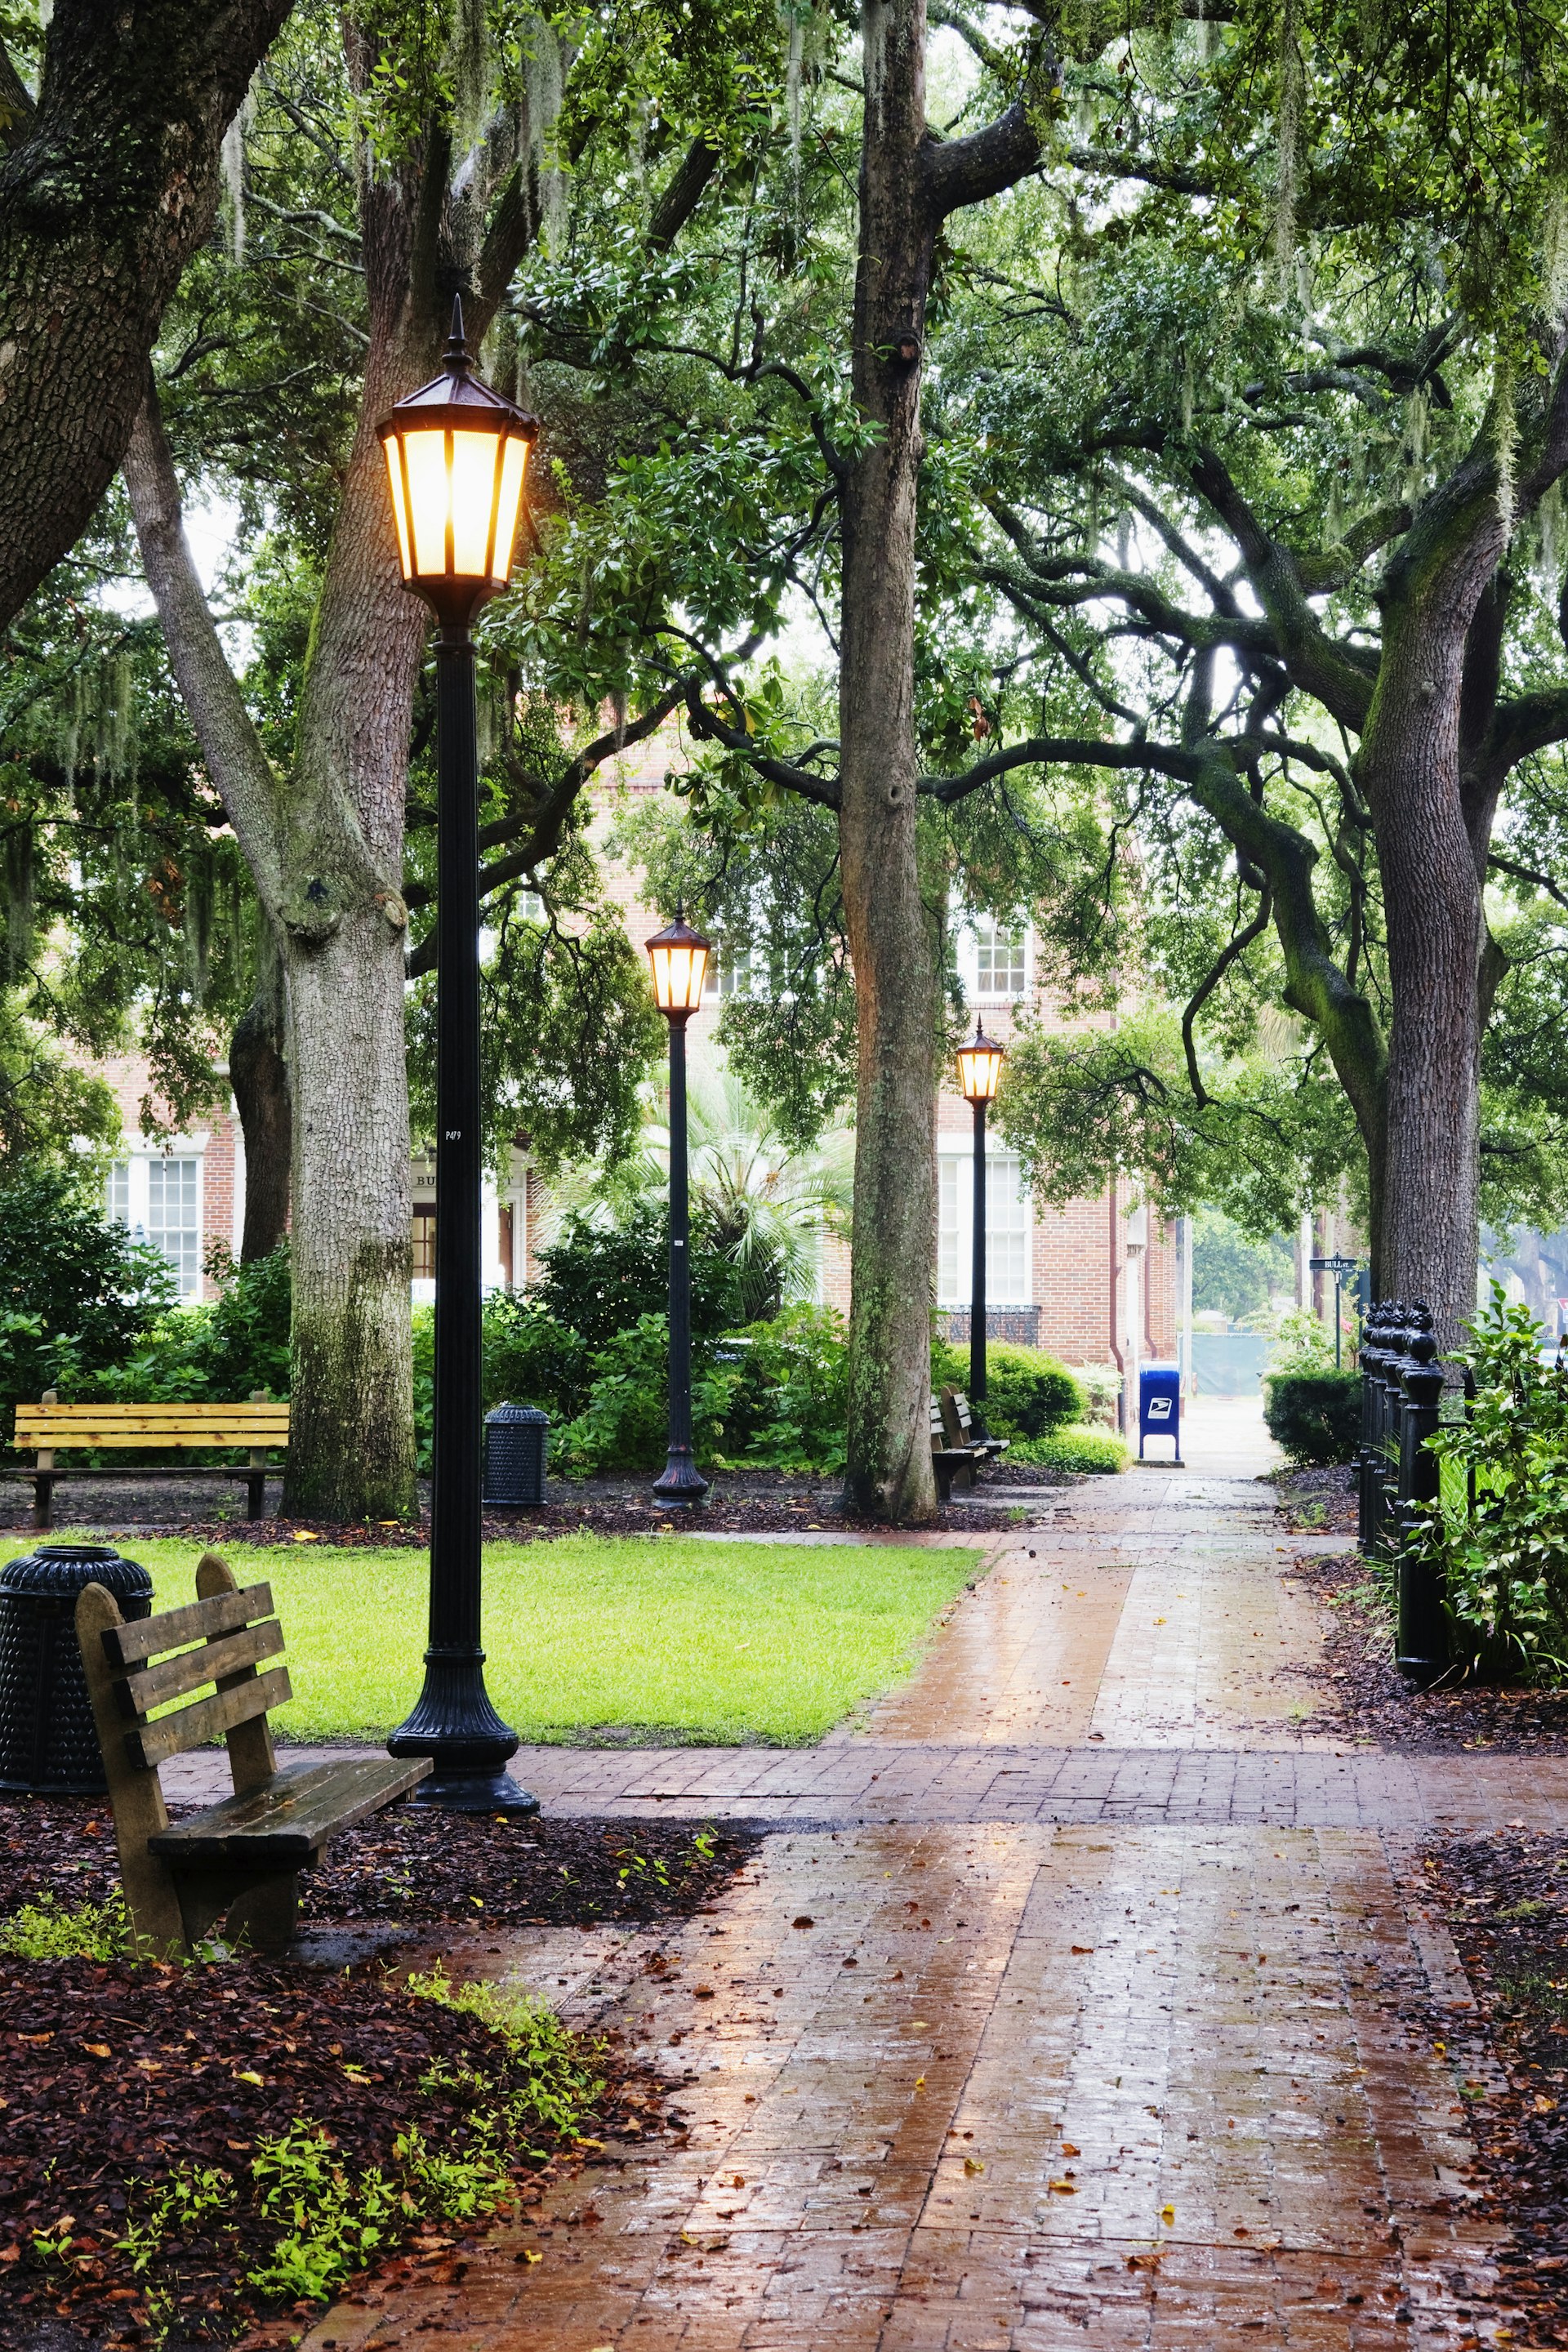 Streetlight in rainy urban park in Savannah, Georgia 